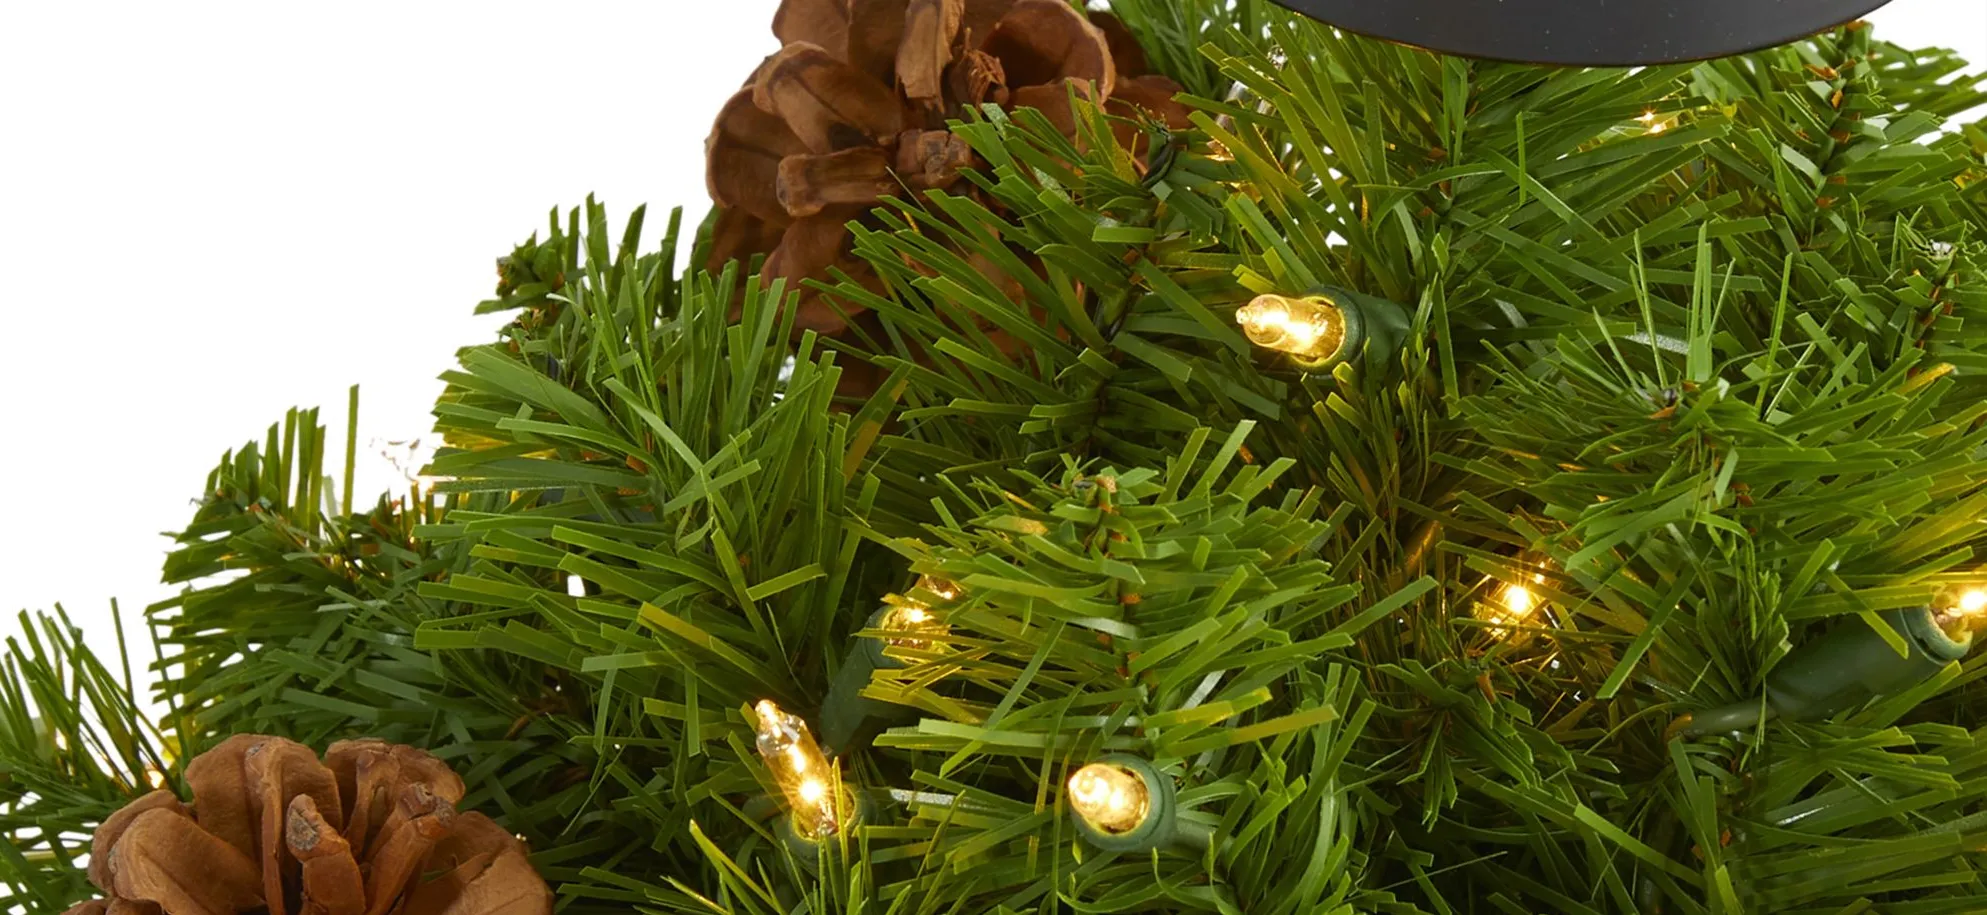 16in. Christmas Pine Candelabrum in Green by Bellanest